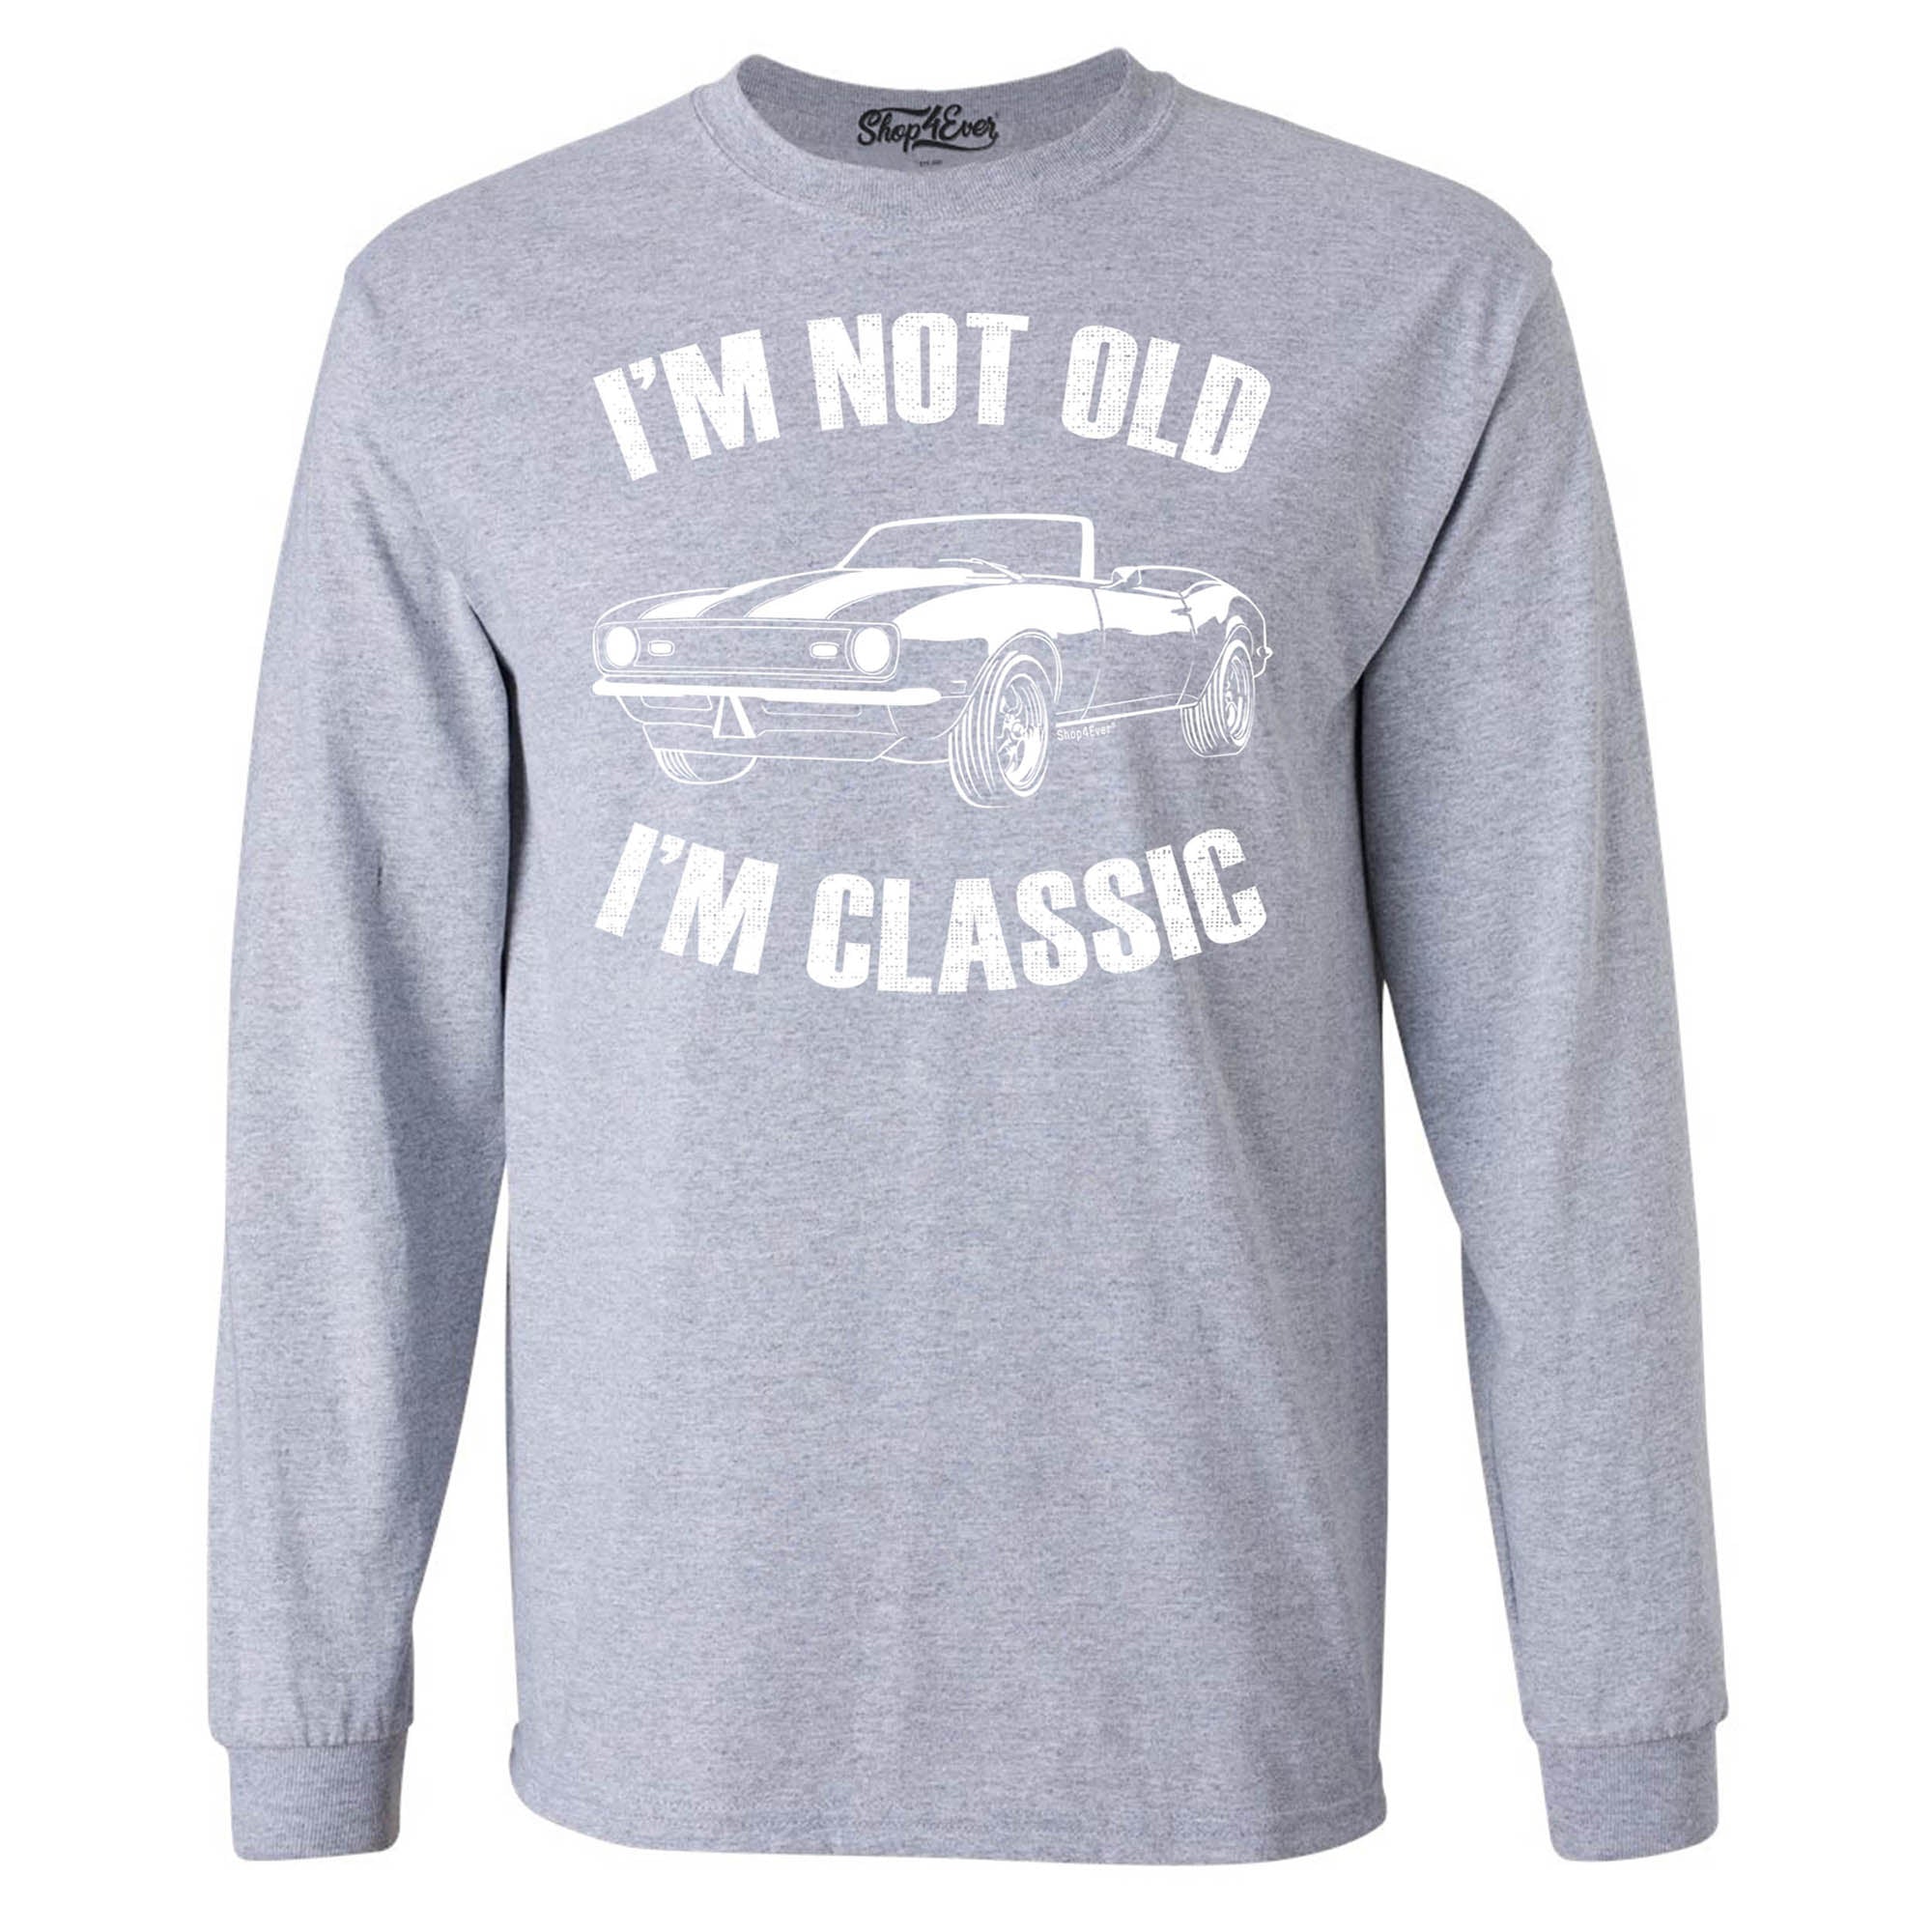 I'm Not Old I'm Classic Long Sleeve Shirt